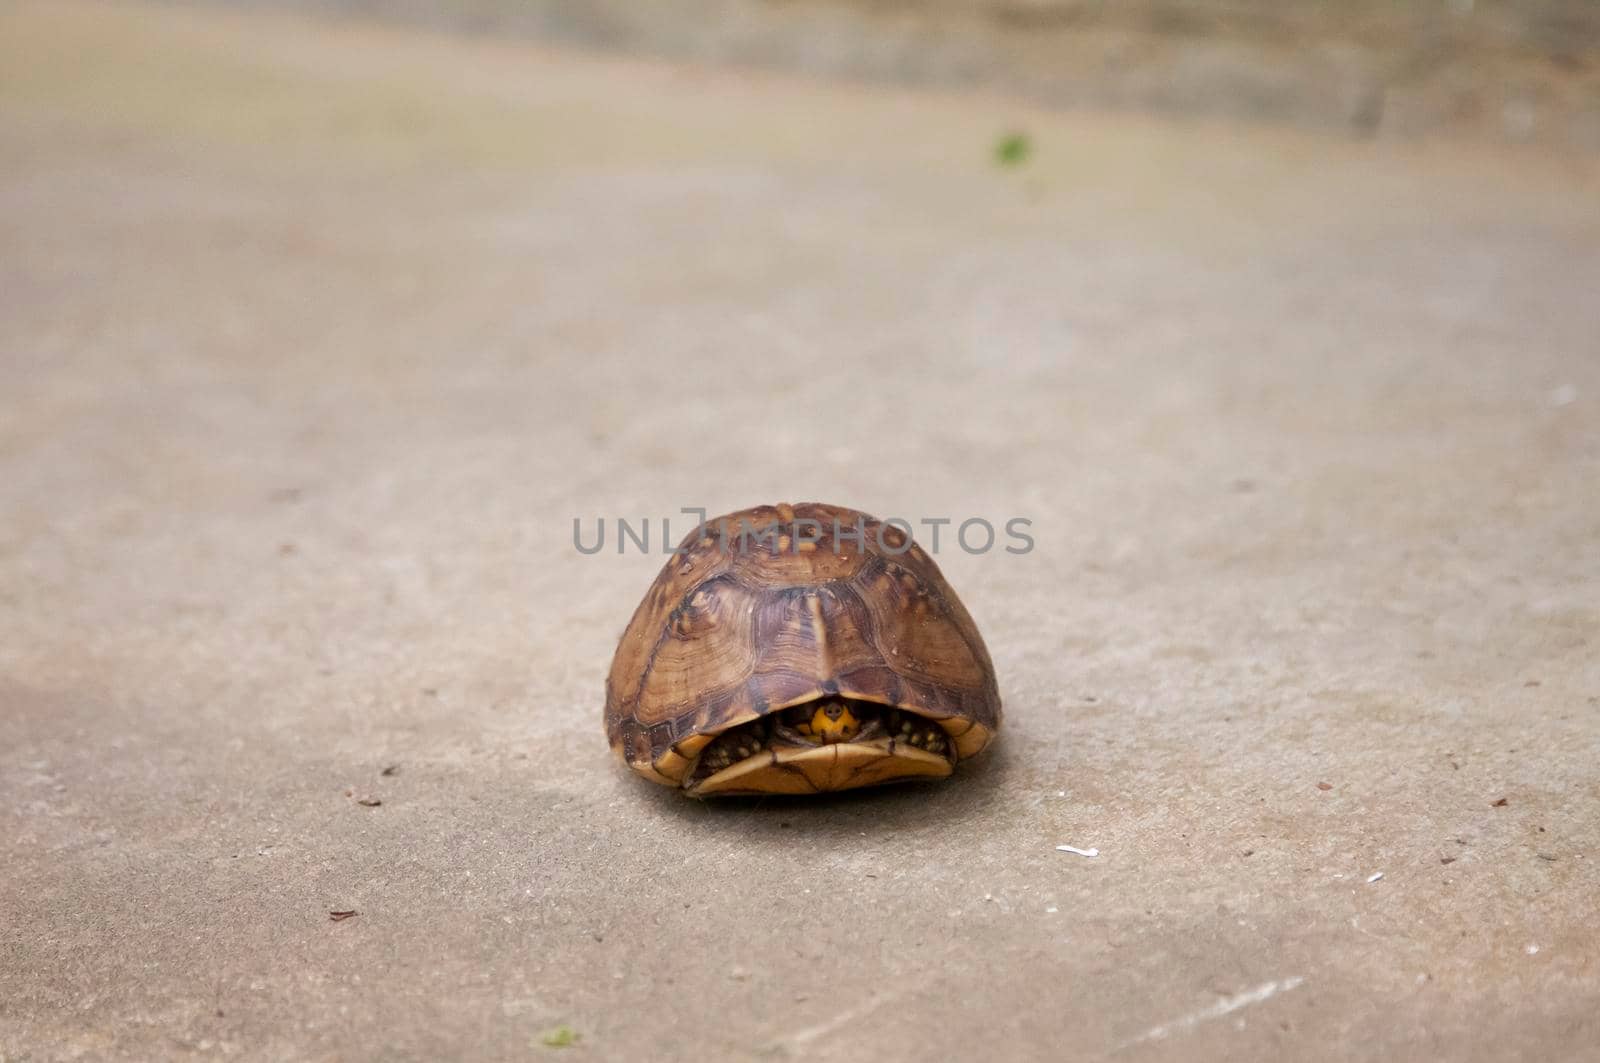 Eastern Box Turtle by tornado98